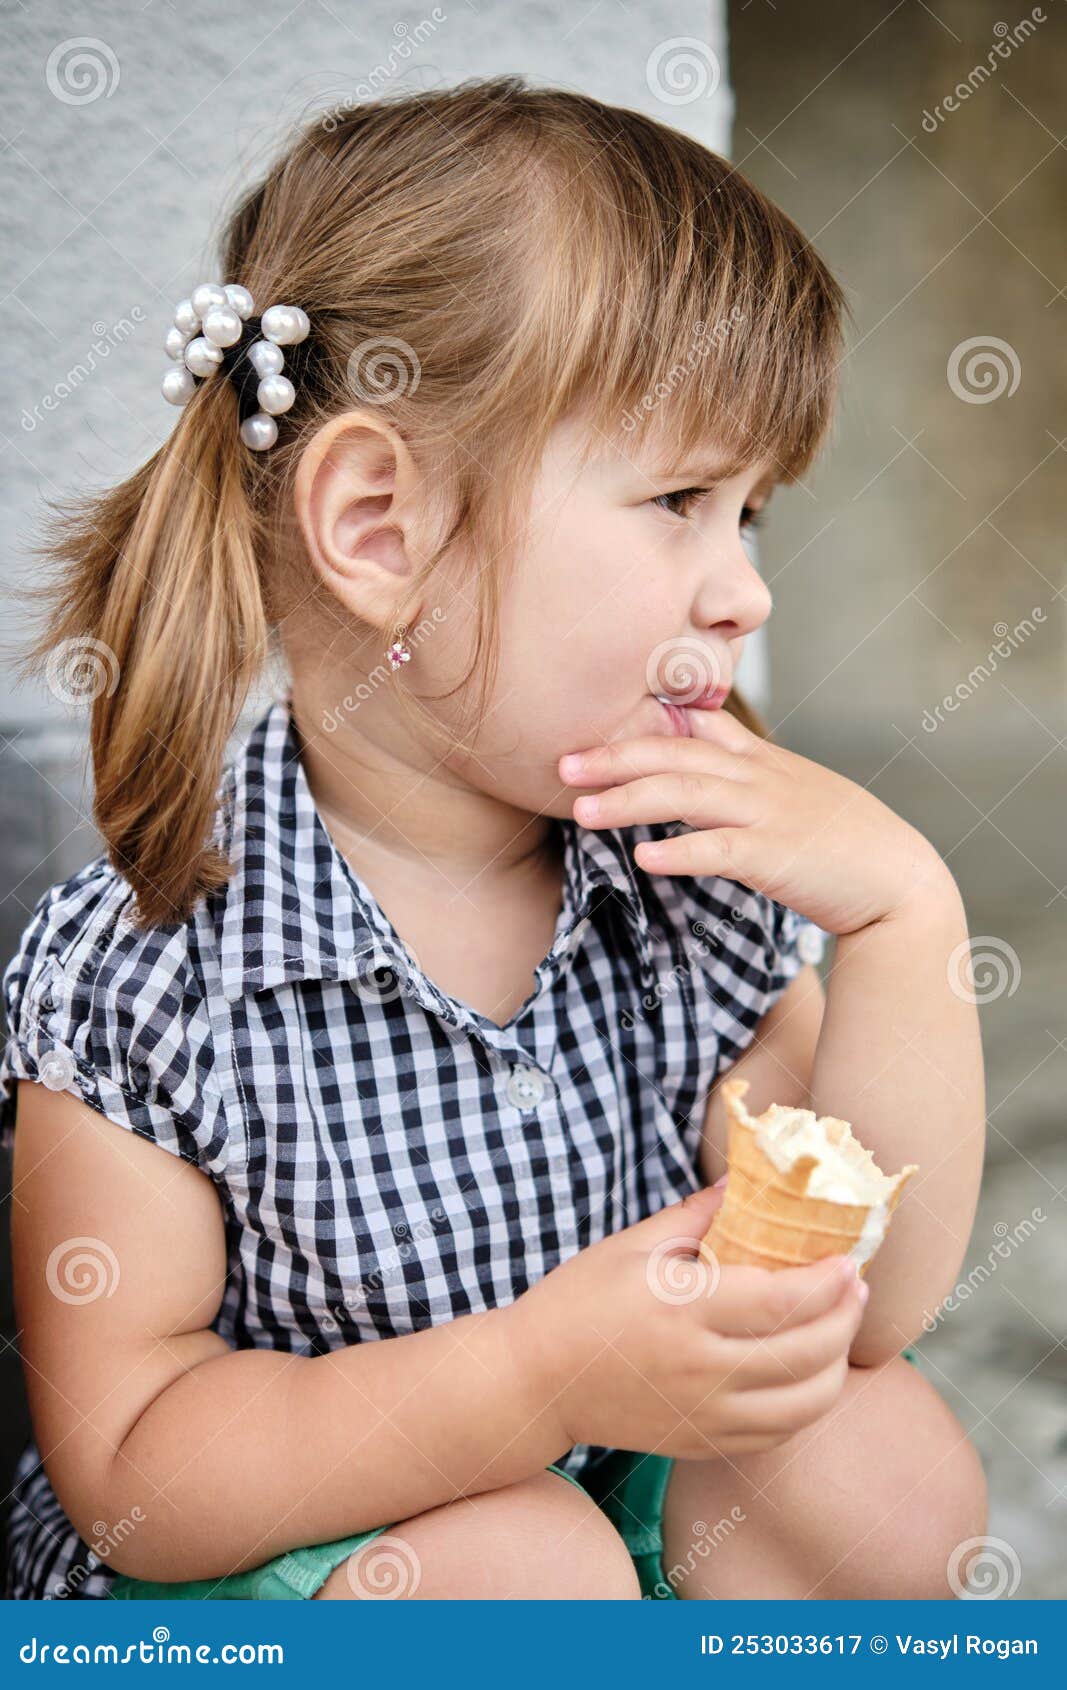 Little Baby Girl Eating Ice Cream Licking Her Fingers Stock Image